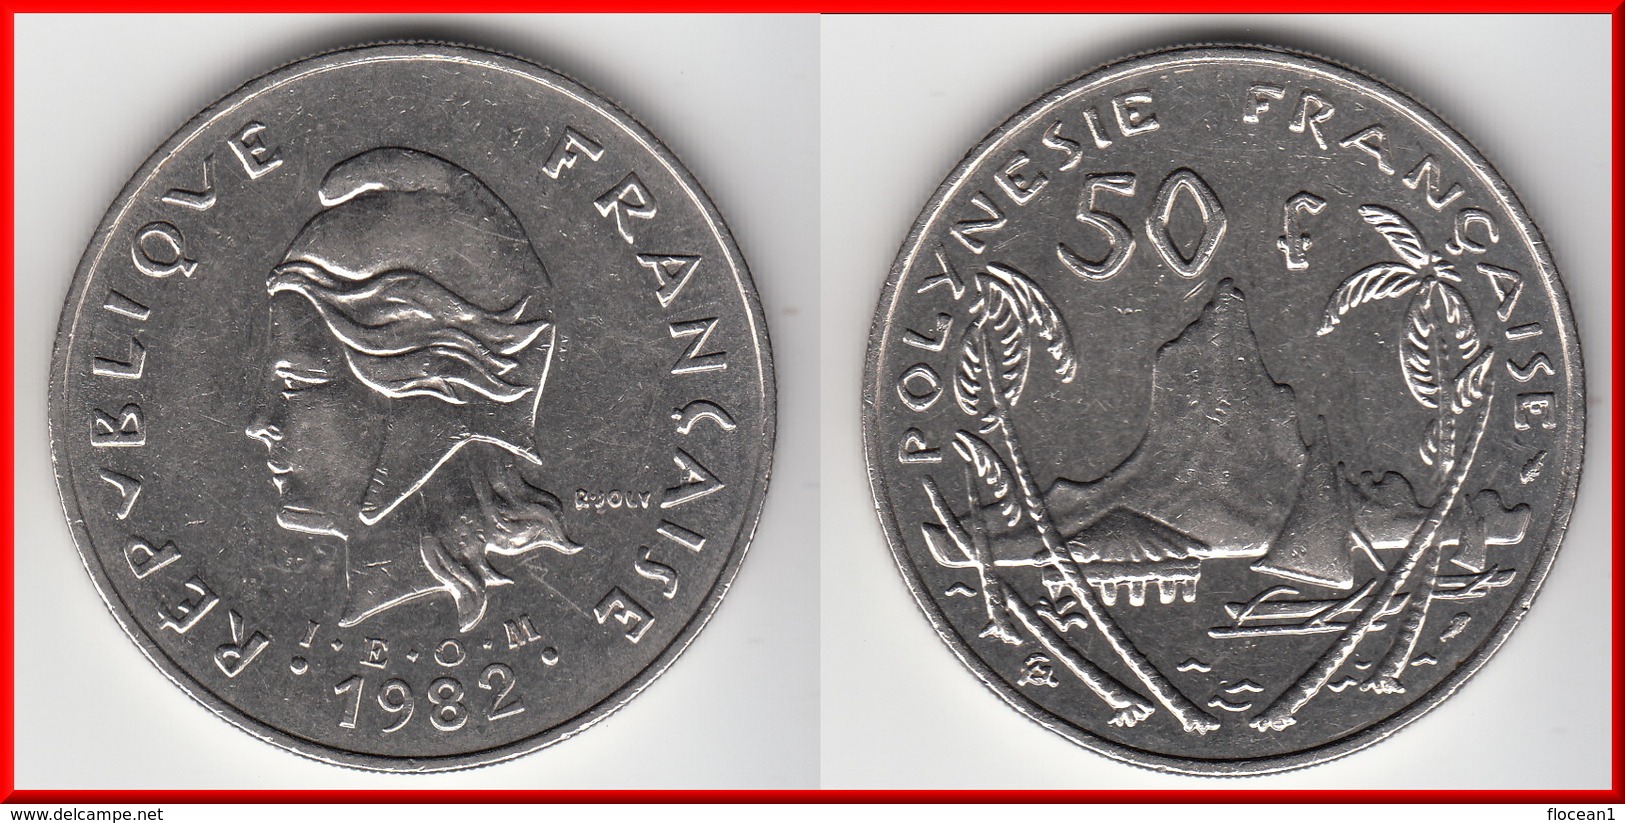 **** POLYNESIE FRANCAISE- FRENCH POLYNESIA - 50 FRANCS 1982 **** EN ACHAT IMMEDIAT !!! - Polinesia Francesa